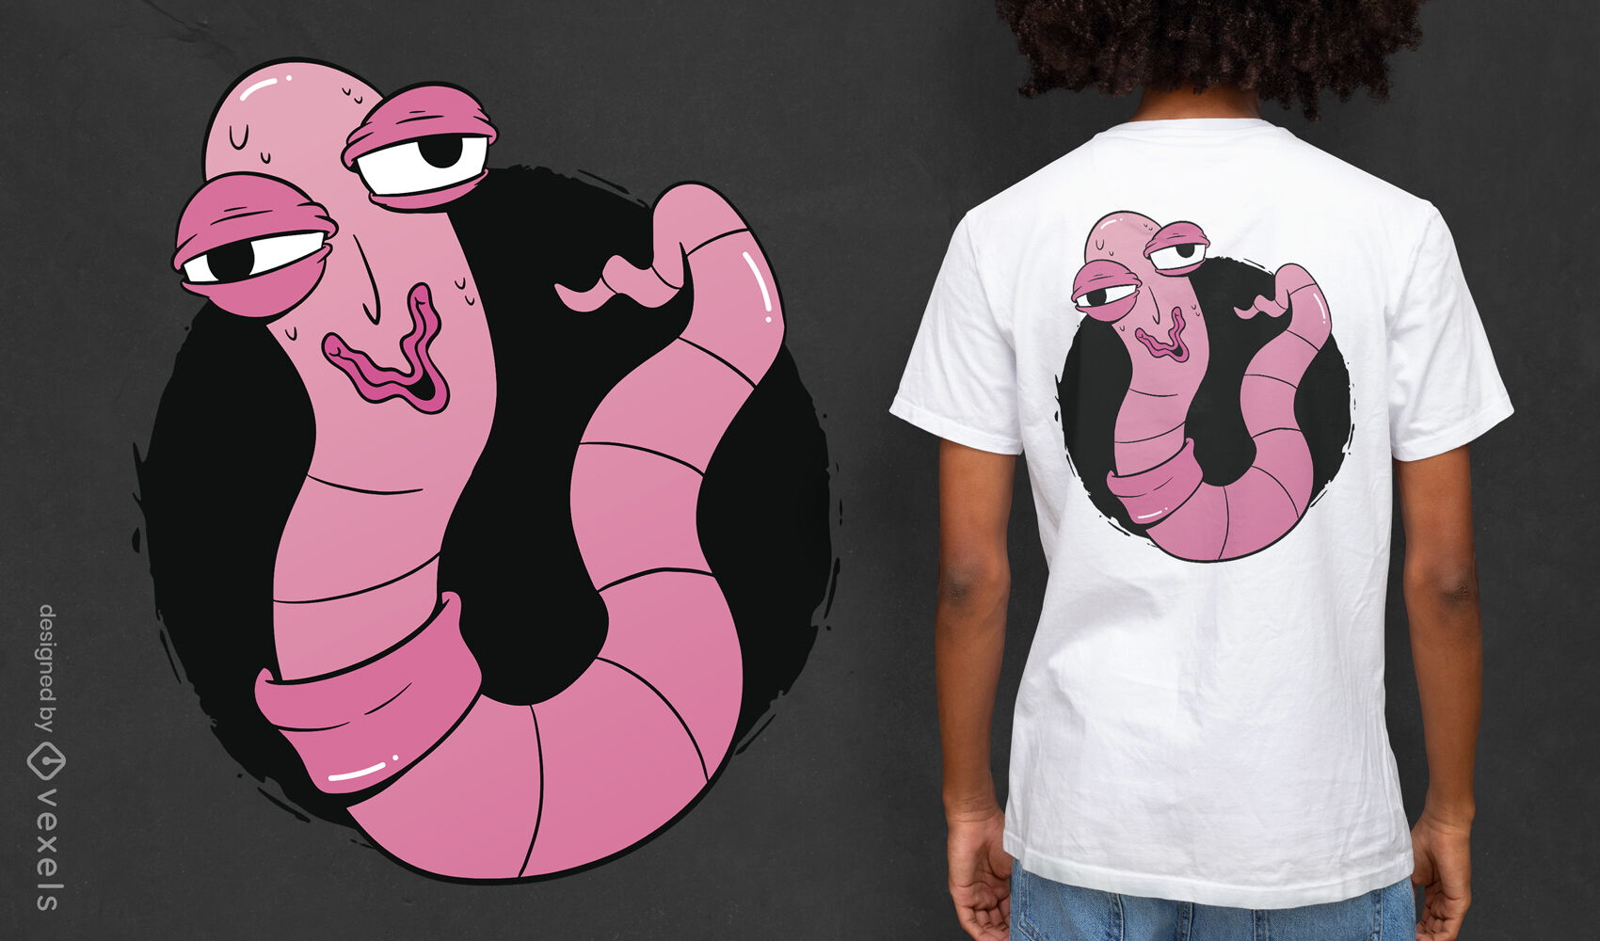 Funny earthworm t-shirt design